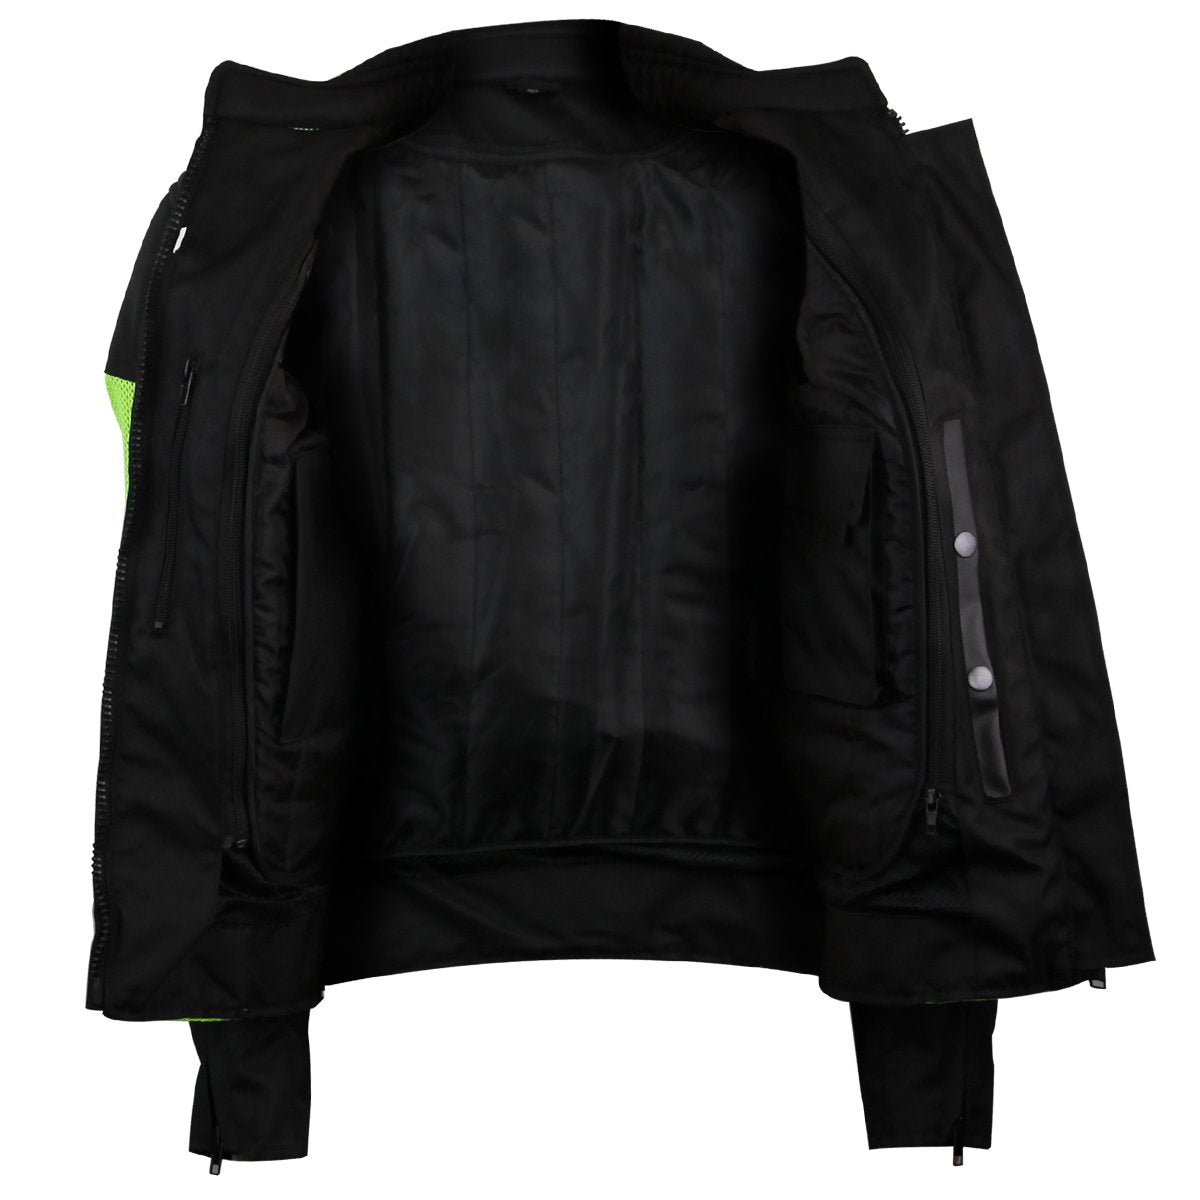 Vance Leather Women's Advanced 3-Season CE Armor Hi-Vis Mesh Motorcycle Jacket